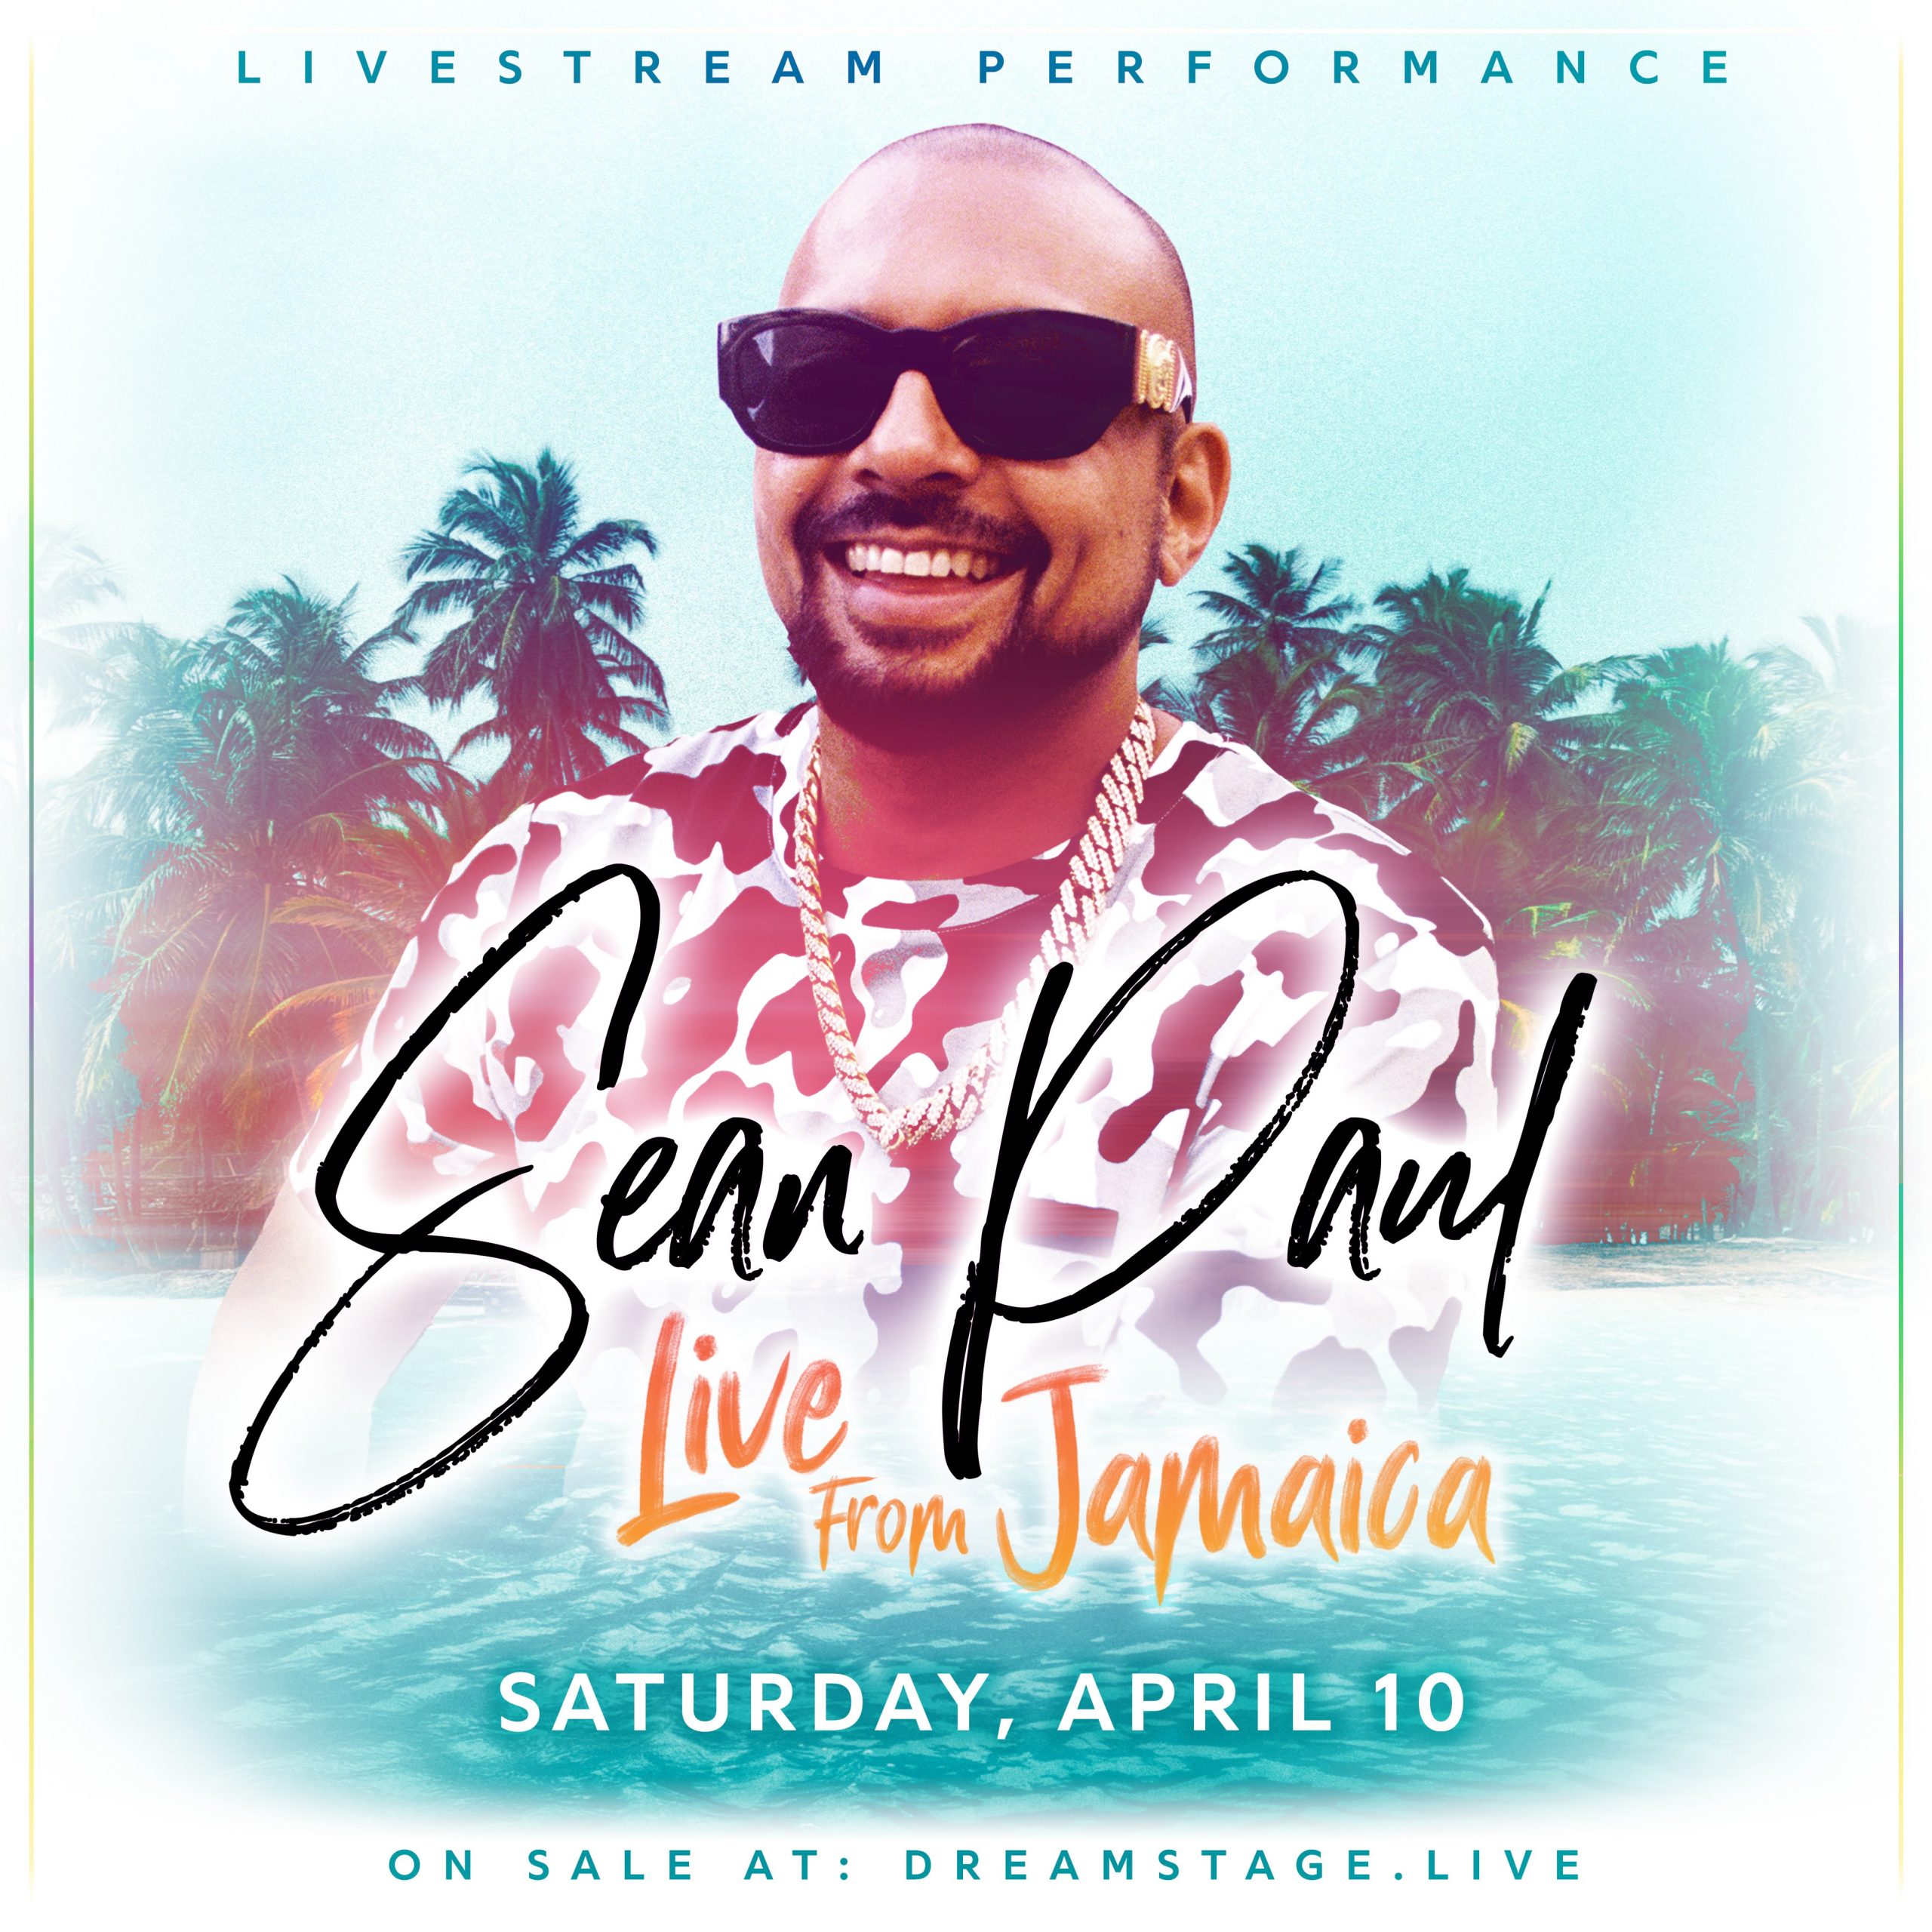 Sean Paul Brings Live Beach Concert From Jamaica To Virtual Venue Dreamstage